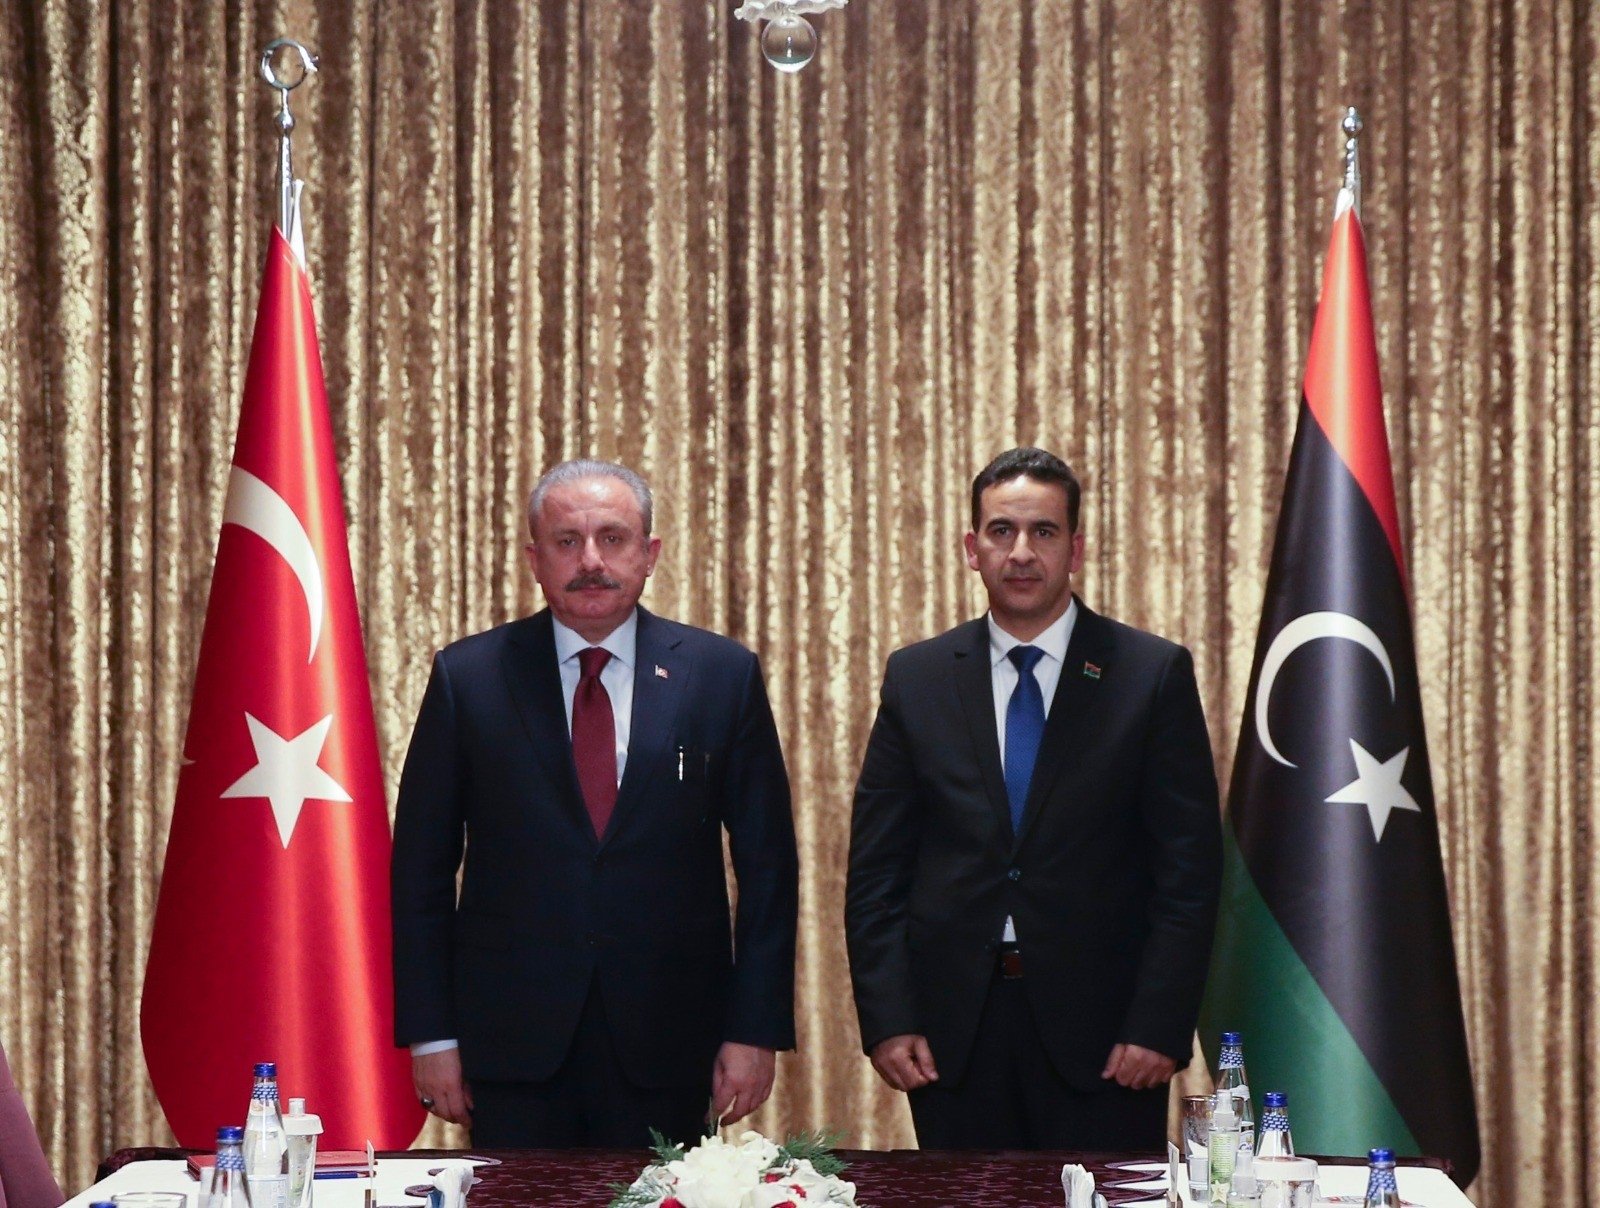 Speaker of Parliament Mustafa Şentop and Libyan Deputy Speaker of the House of Representatives Fawzi al-Nuwairi, Ankara, December 15, 2021. (IHA Photo)